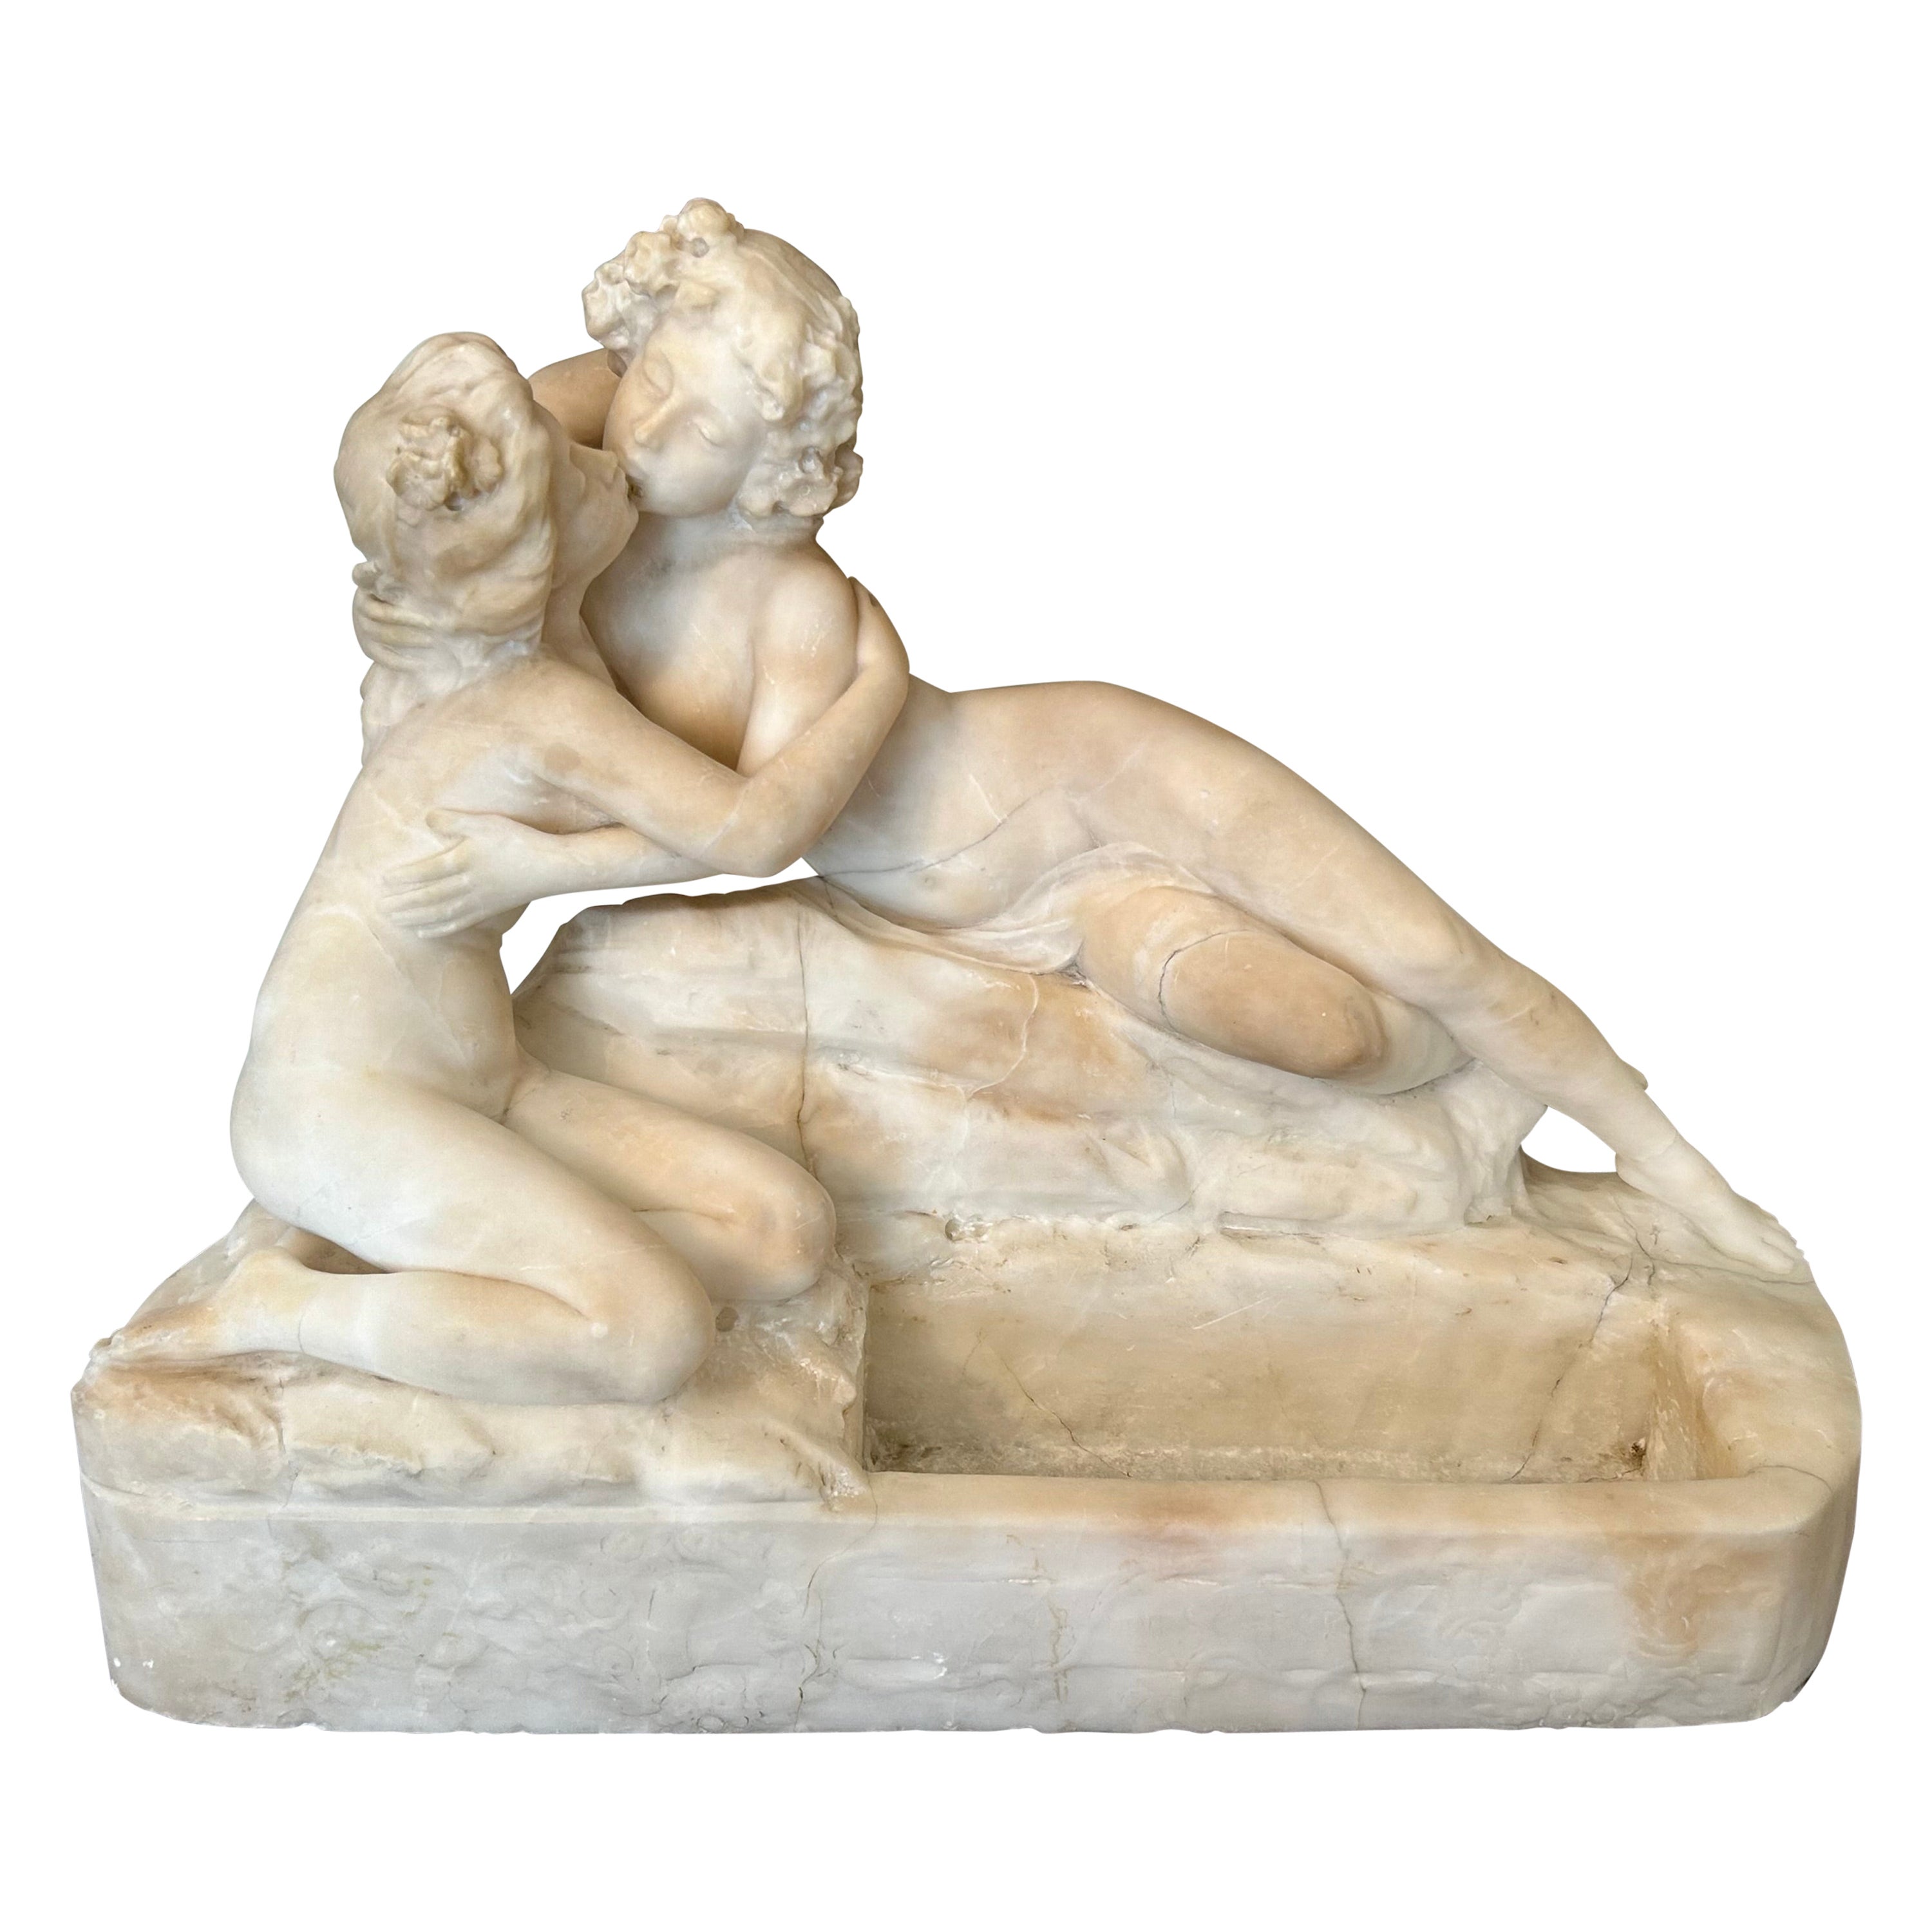 Art Nouveau Marble Sculpture of Two Figures Kissing For Sale